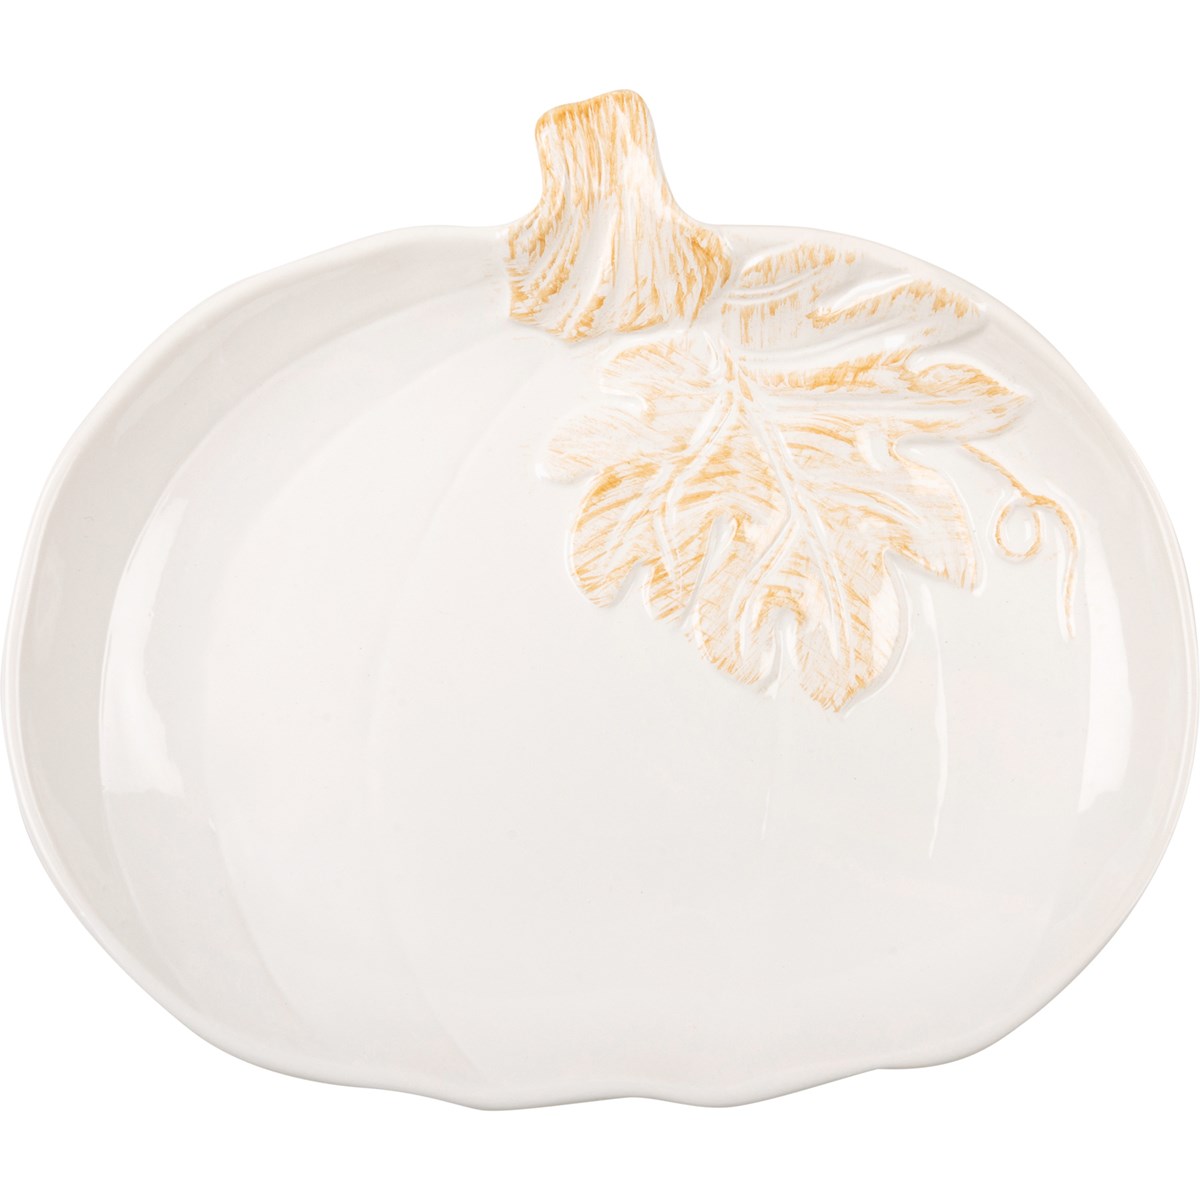 Large White Pumpkin Plate - Ceramic